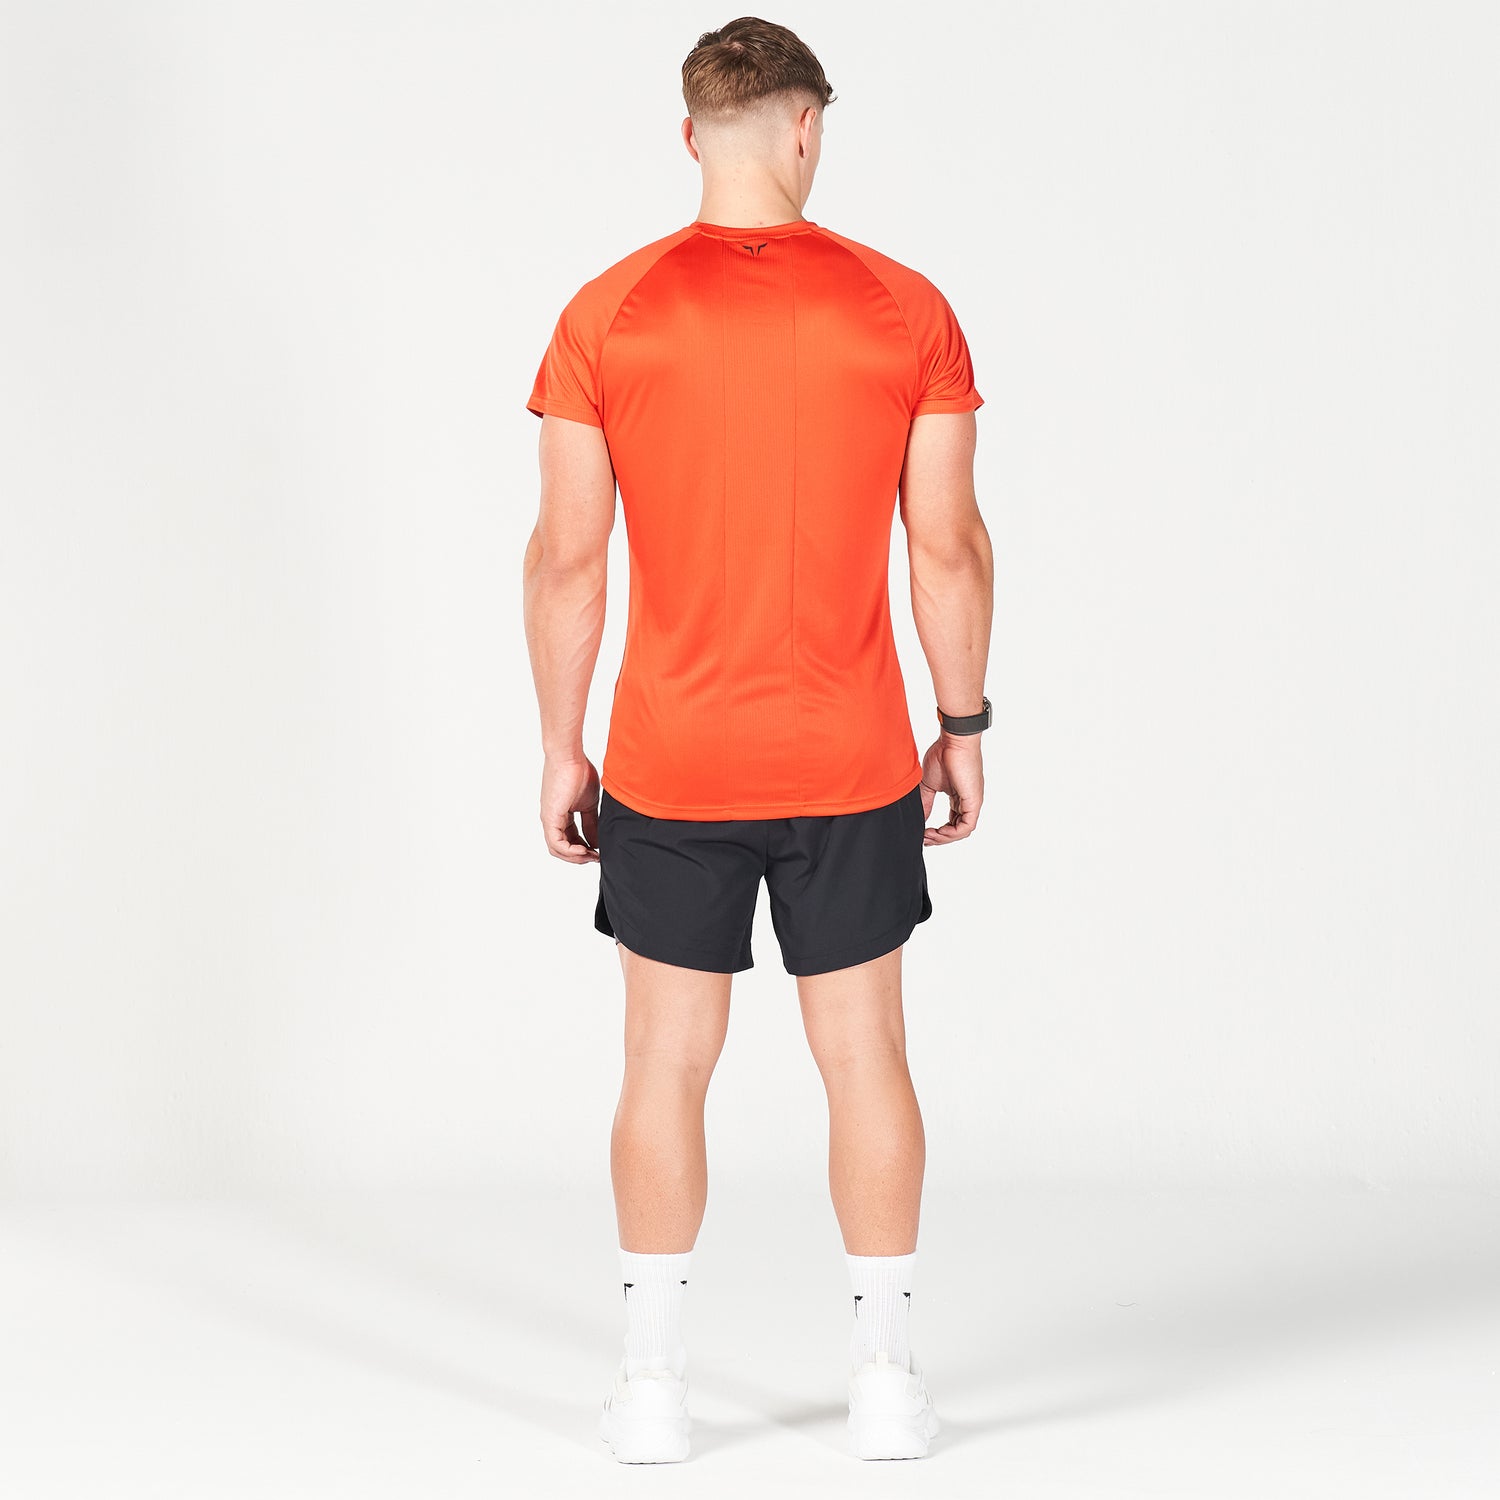 squatwolf-gym-wear-statement-dryflex-tee-paprika-workout-shirts-for-men